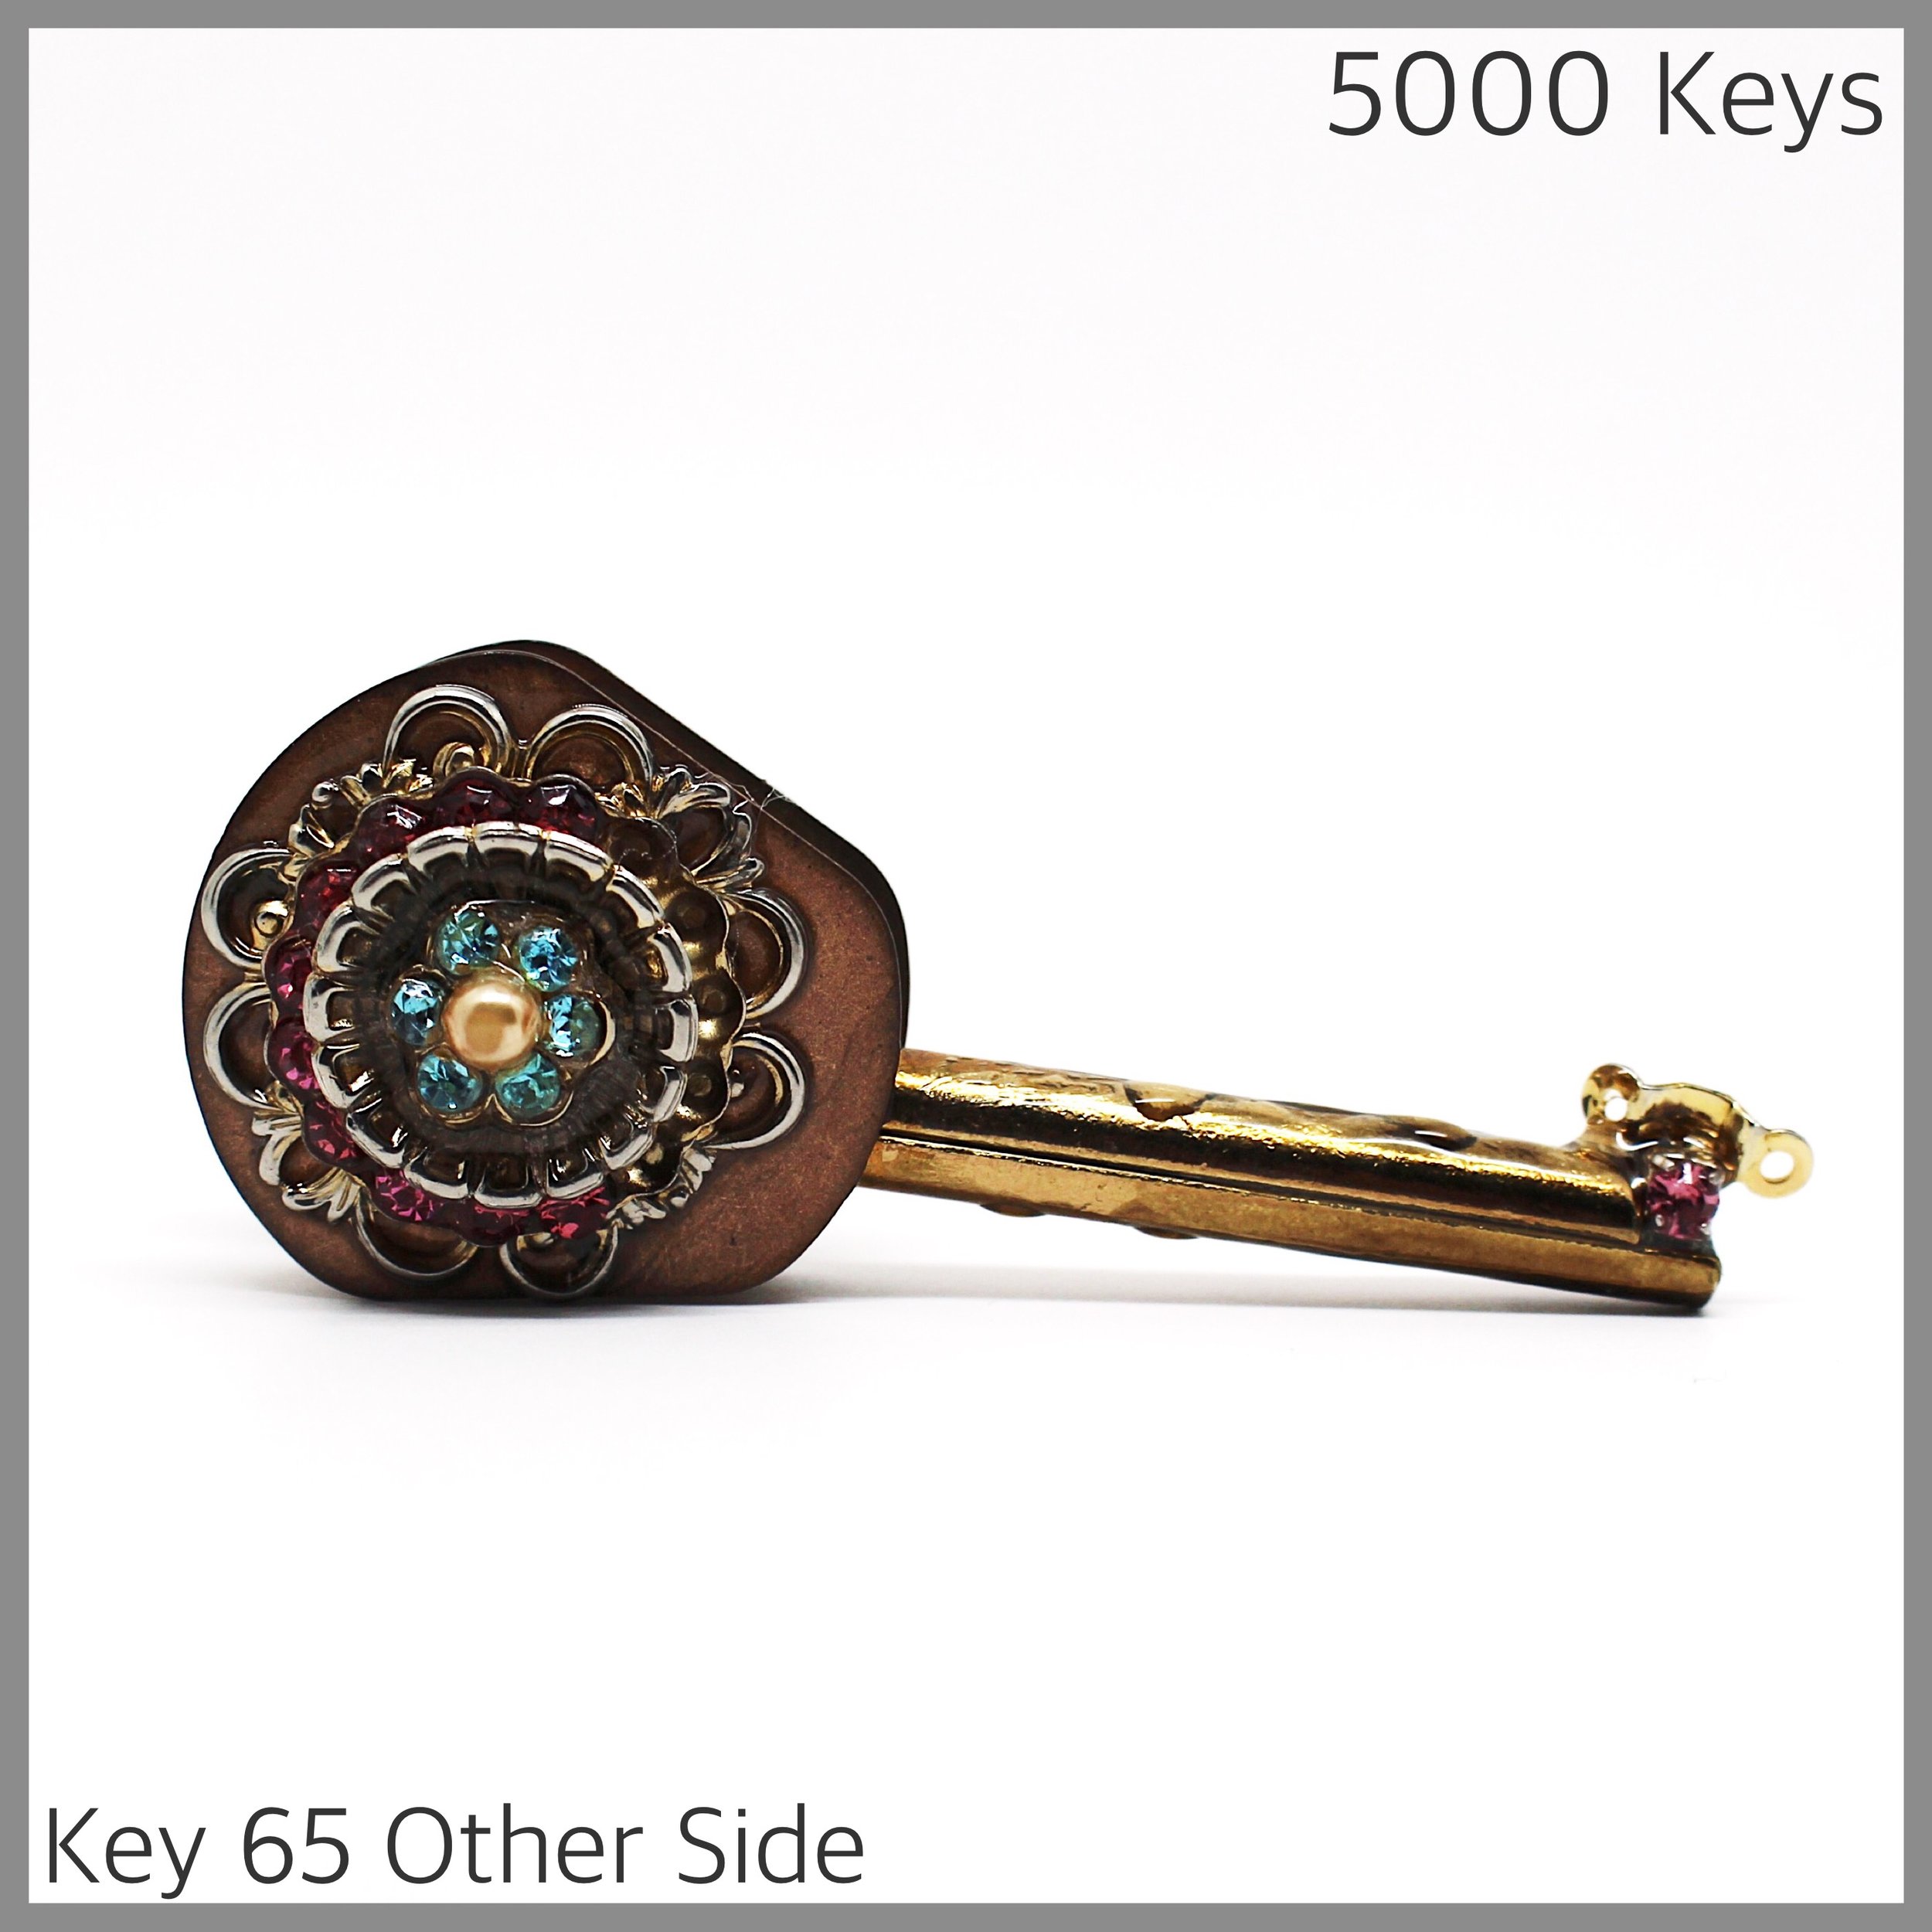 Key 65 other side - 1.JPG